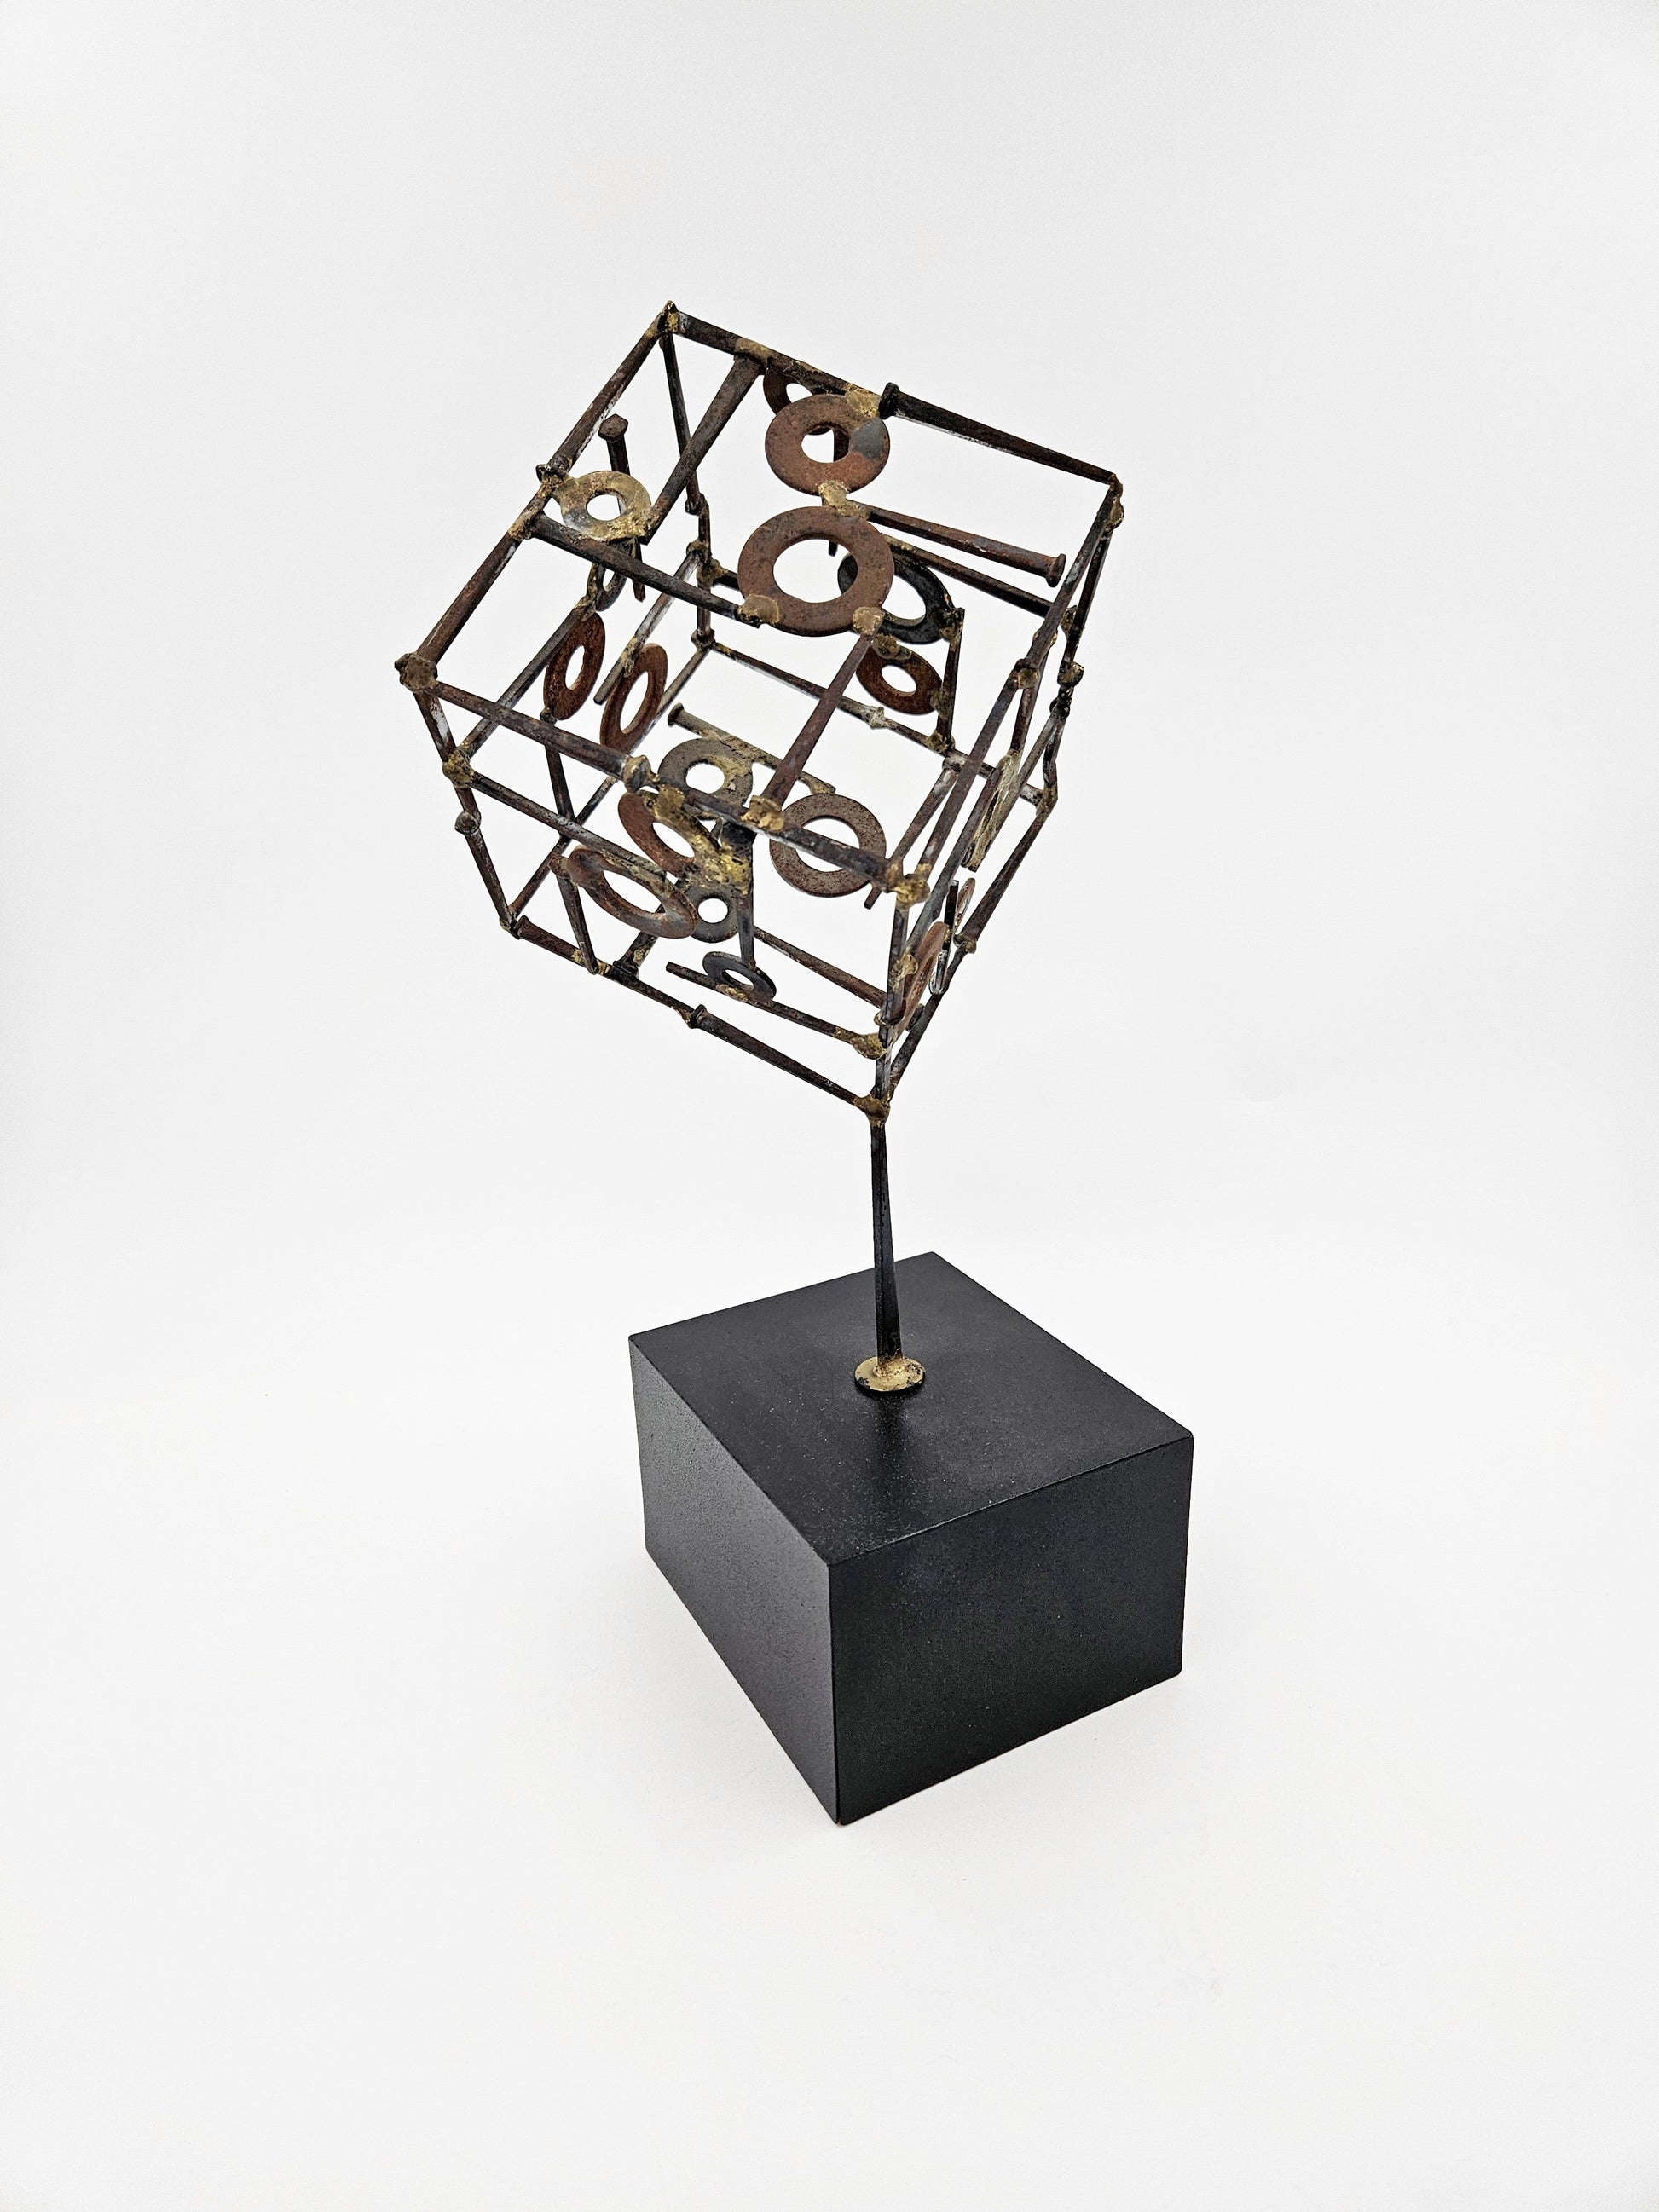 Sculpture Sculpture Abstract Constructivism Nails and Washers 3-D Cube Sculpture Circa 1960s